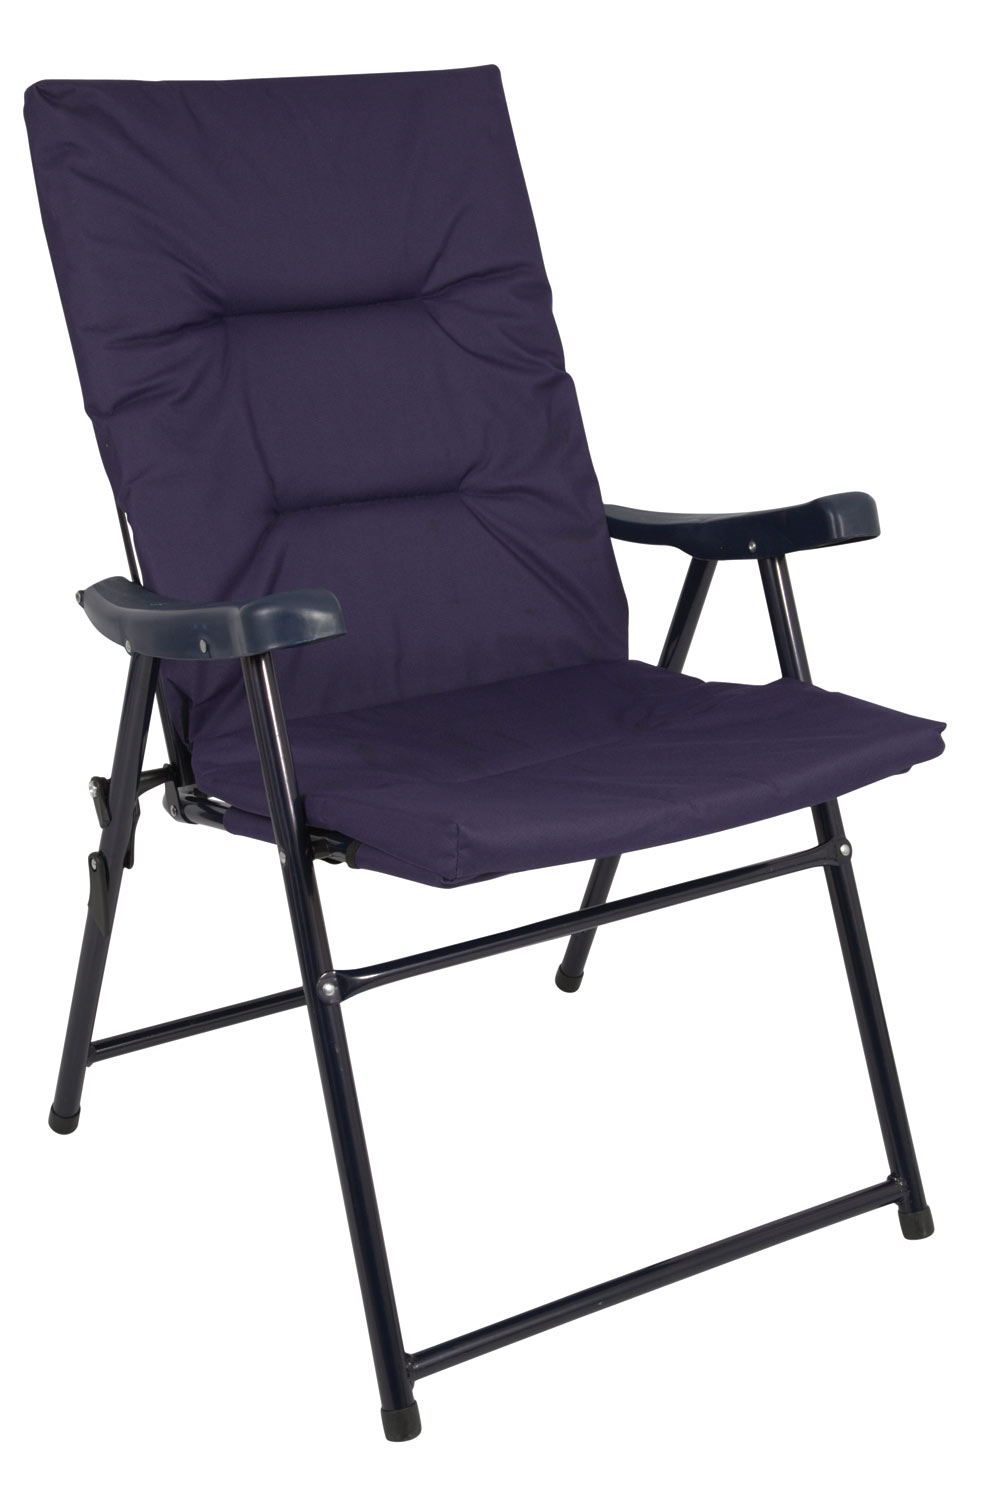 padded folding chair